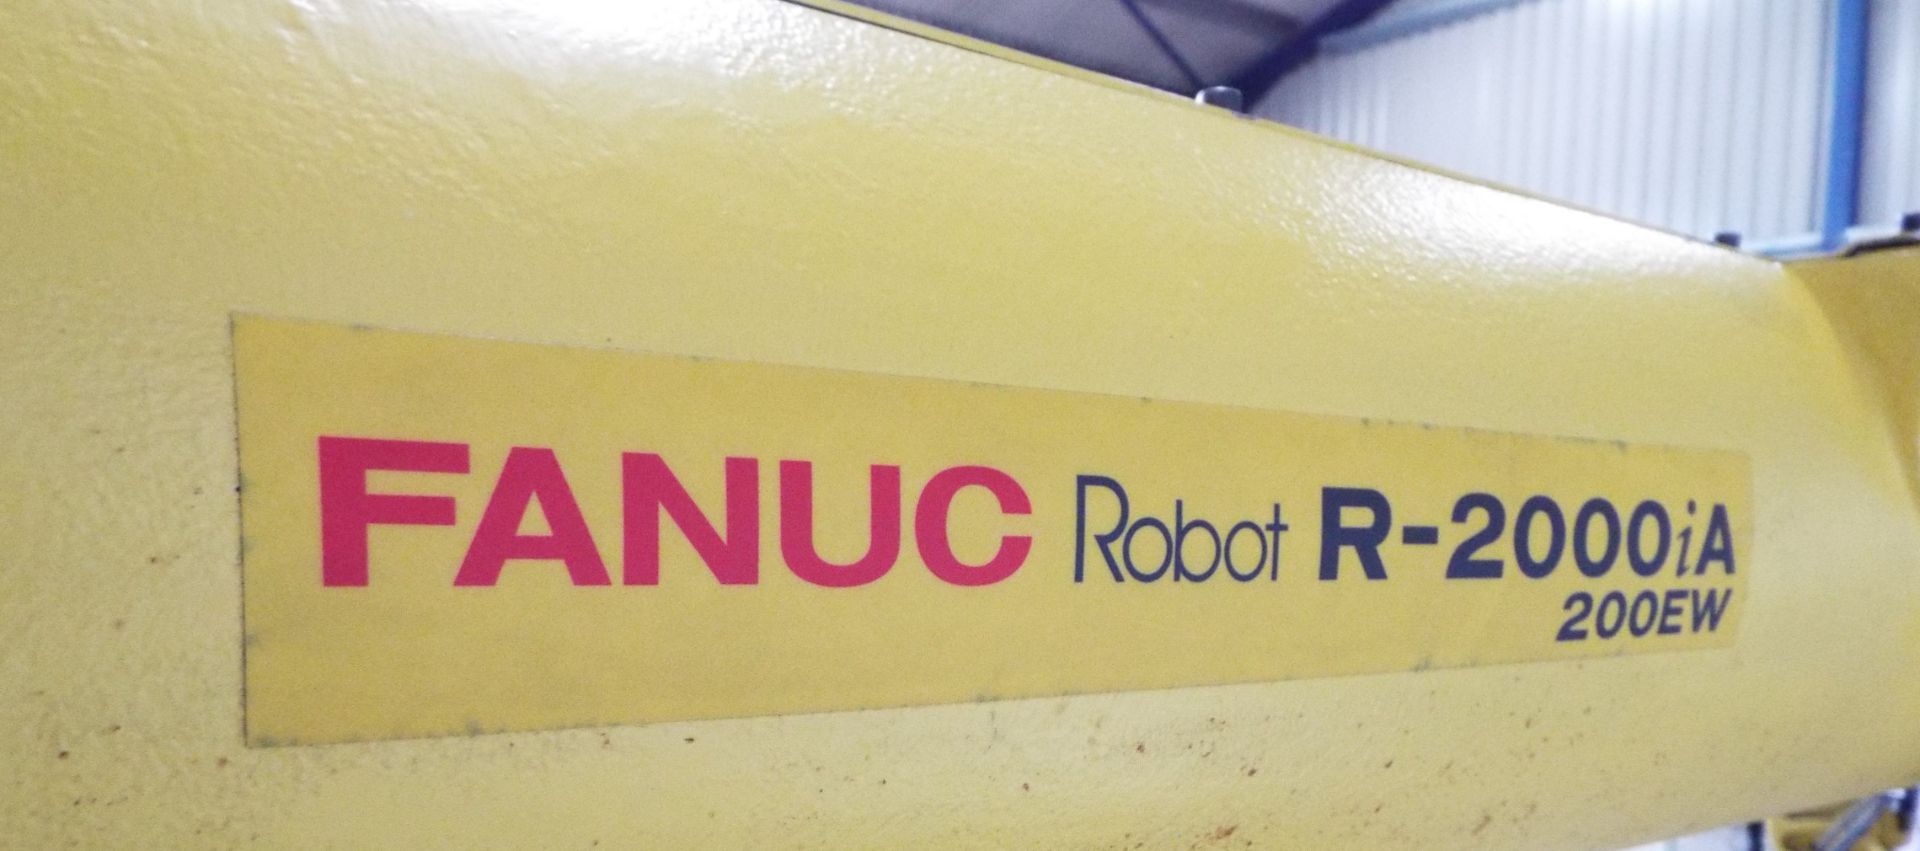 Fanuc Robot Type R-2000iA-200EW - Image 3 of 8